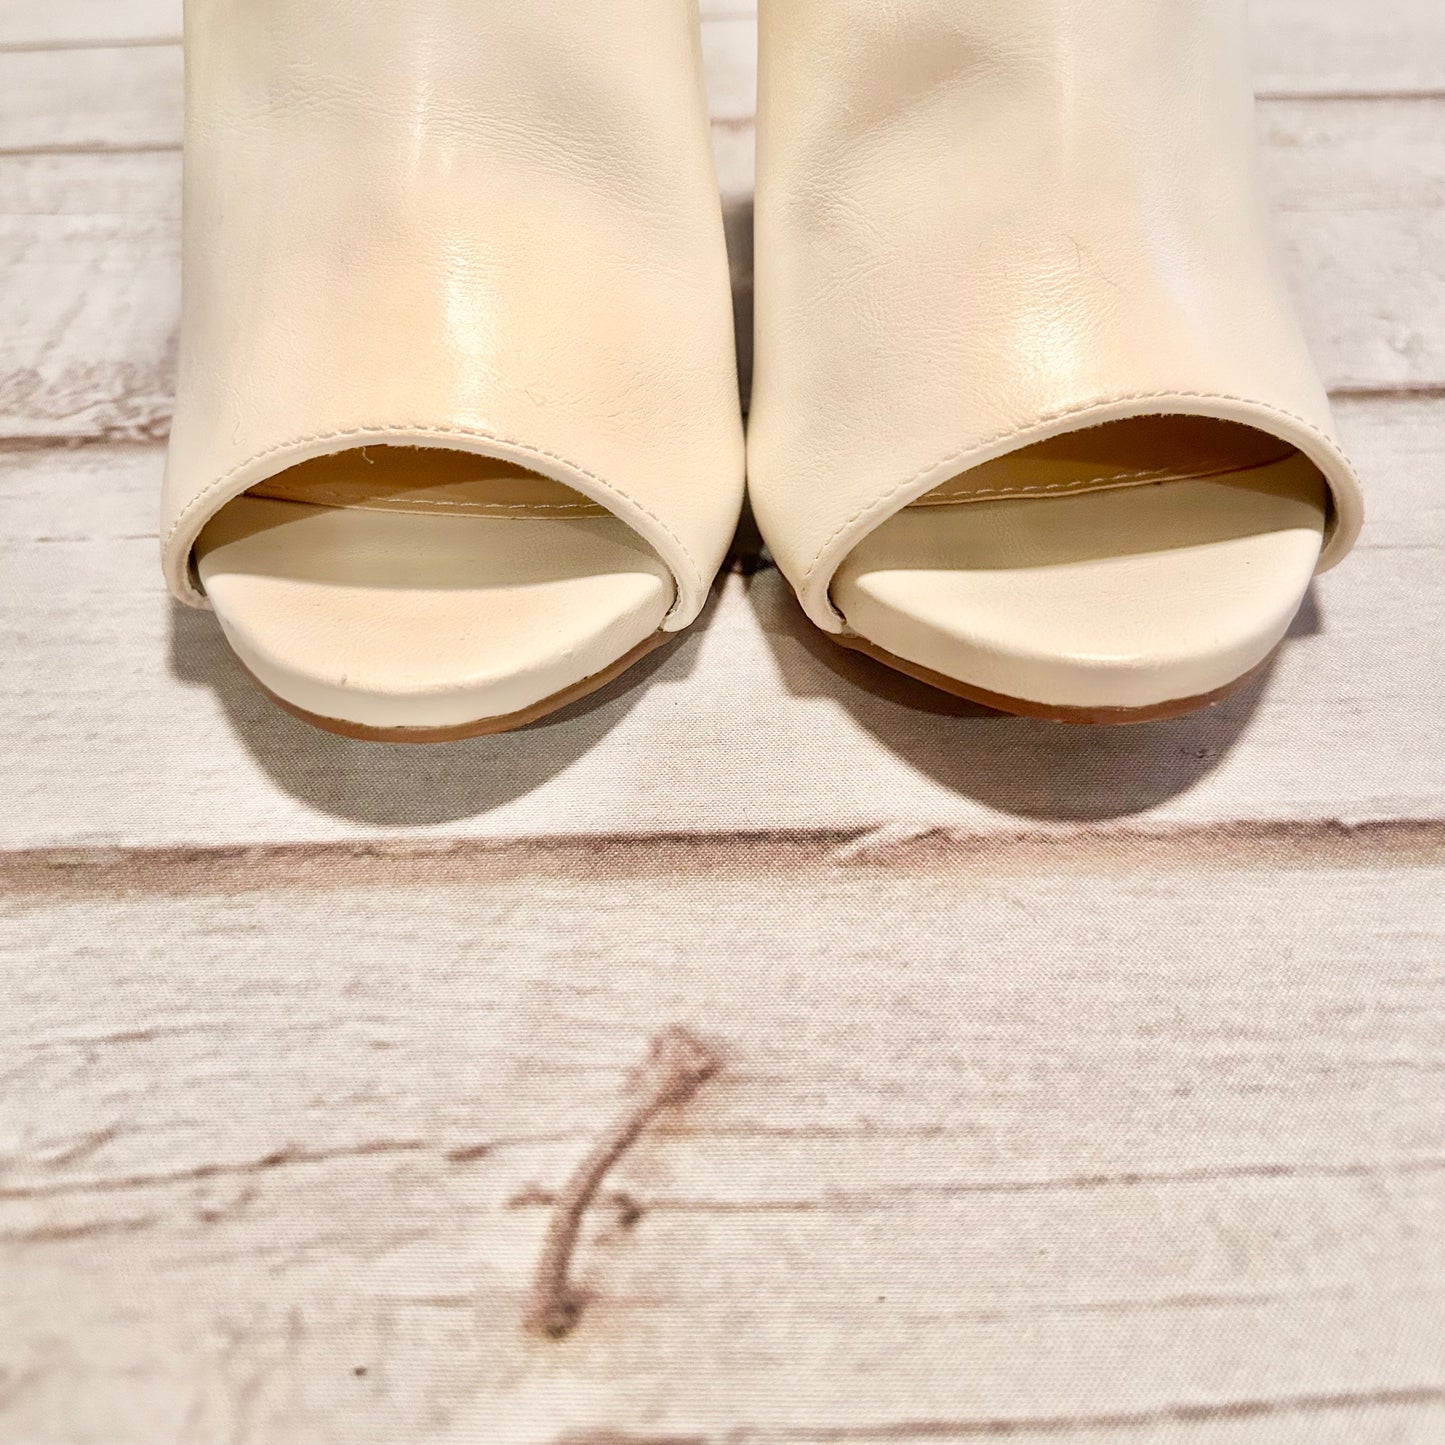 Sandals Heels Stiletto By Shoedazzle  Size: 7